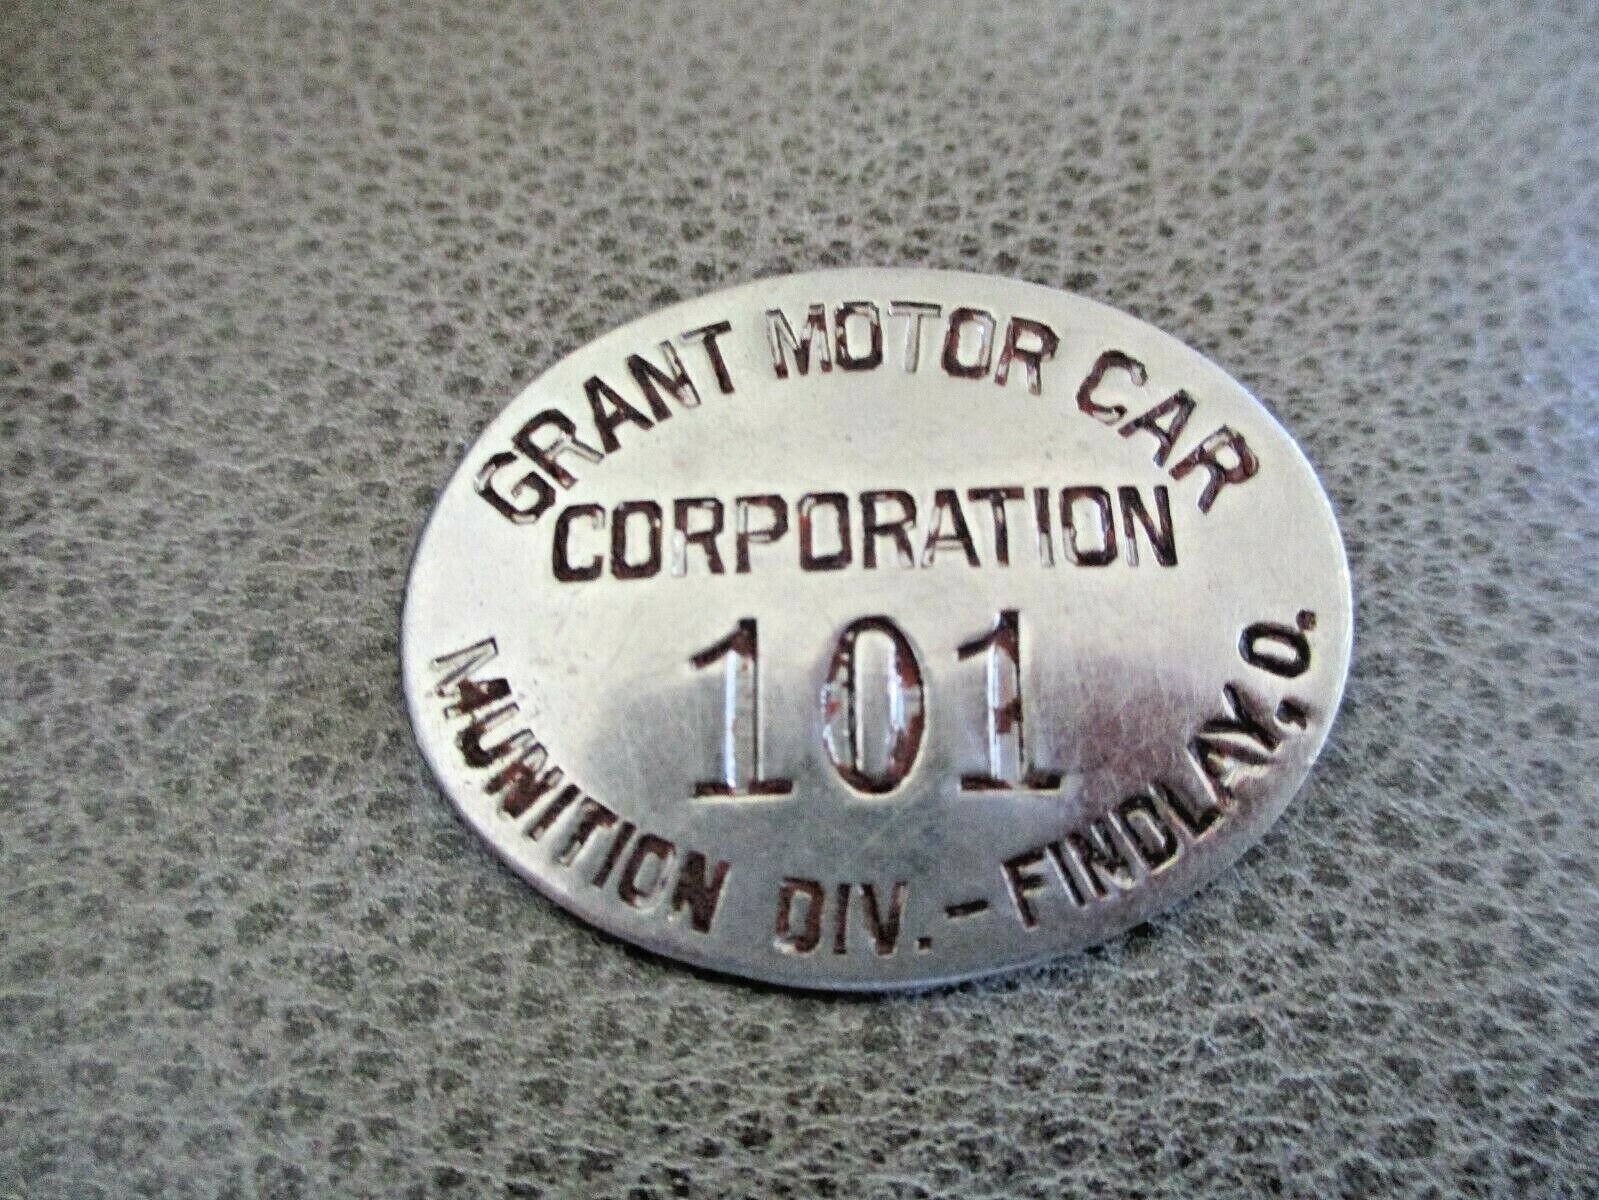 WWI GRANT MOTOR CAR CORPORATION MUNITION DIV.-FINDLAY, OHIO BADGE #101 (LOW #)